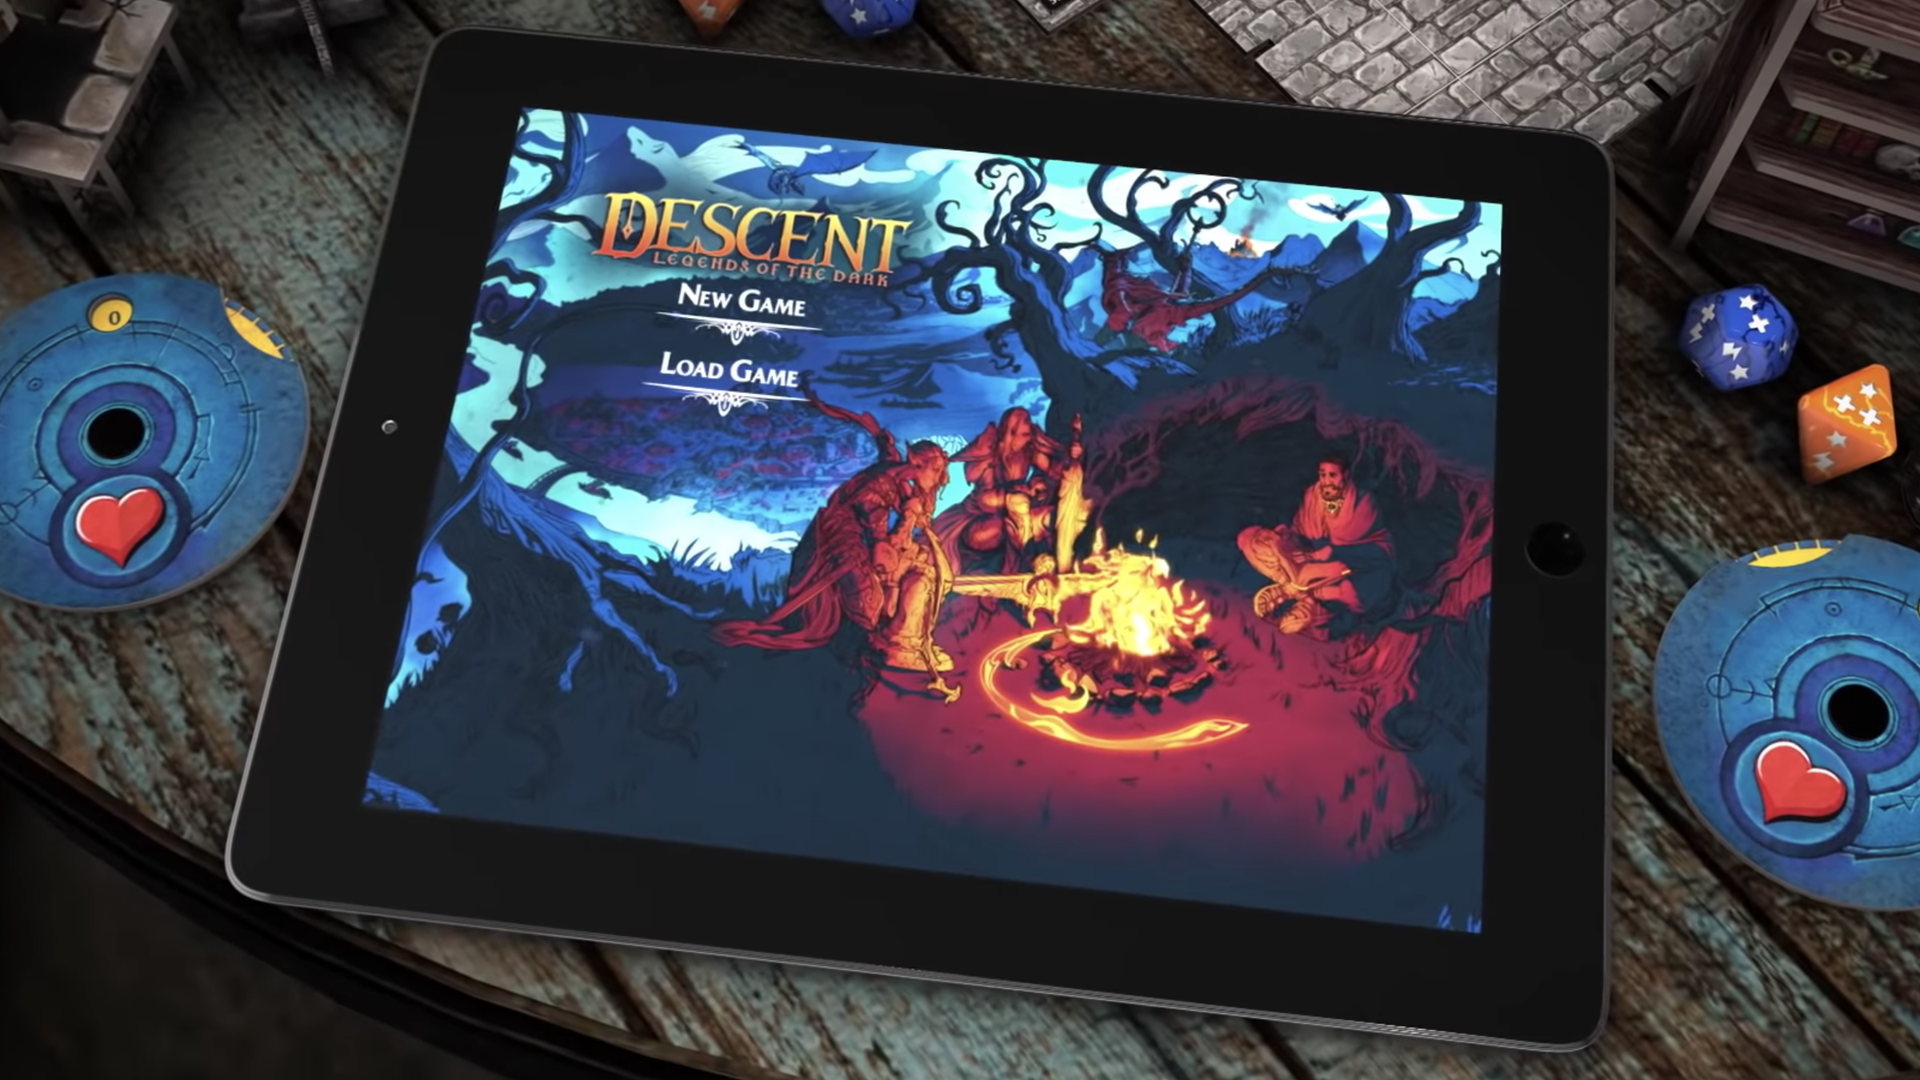 descent legends of the dark reviews